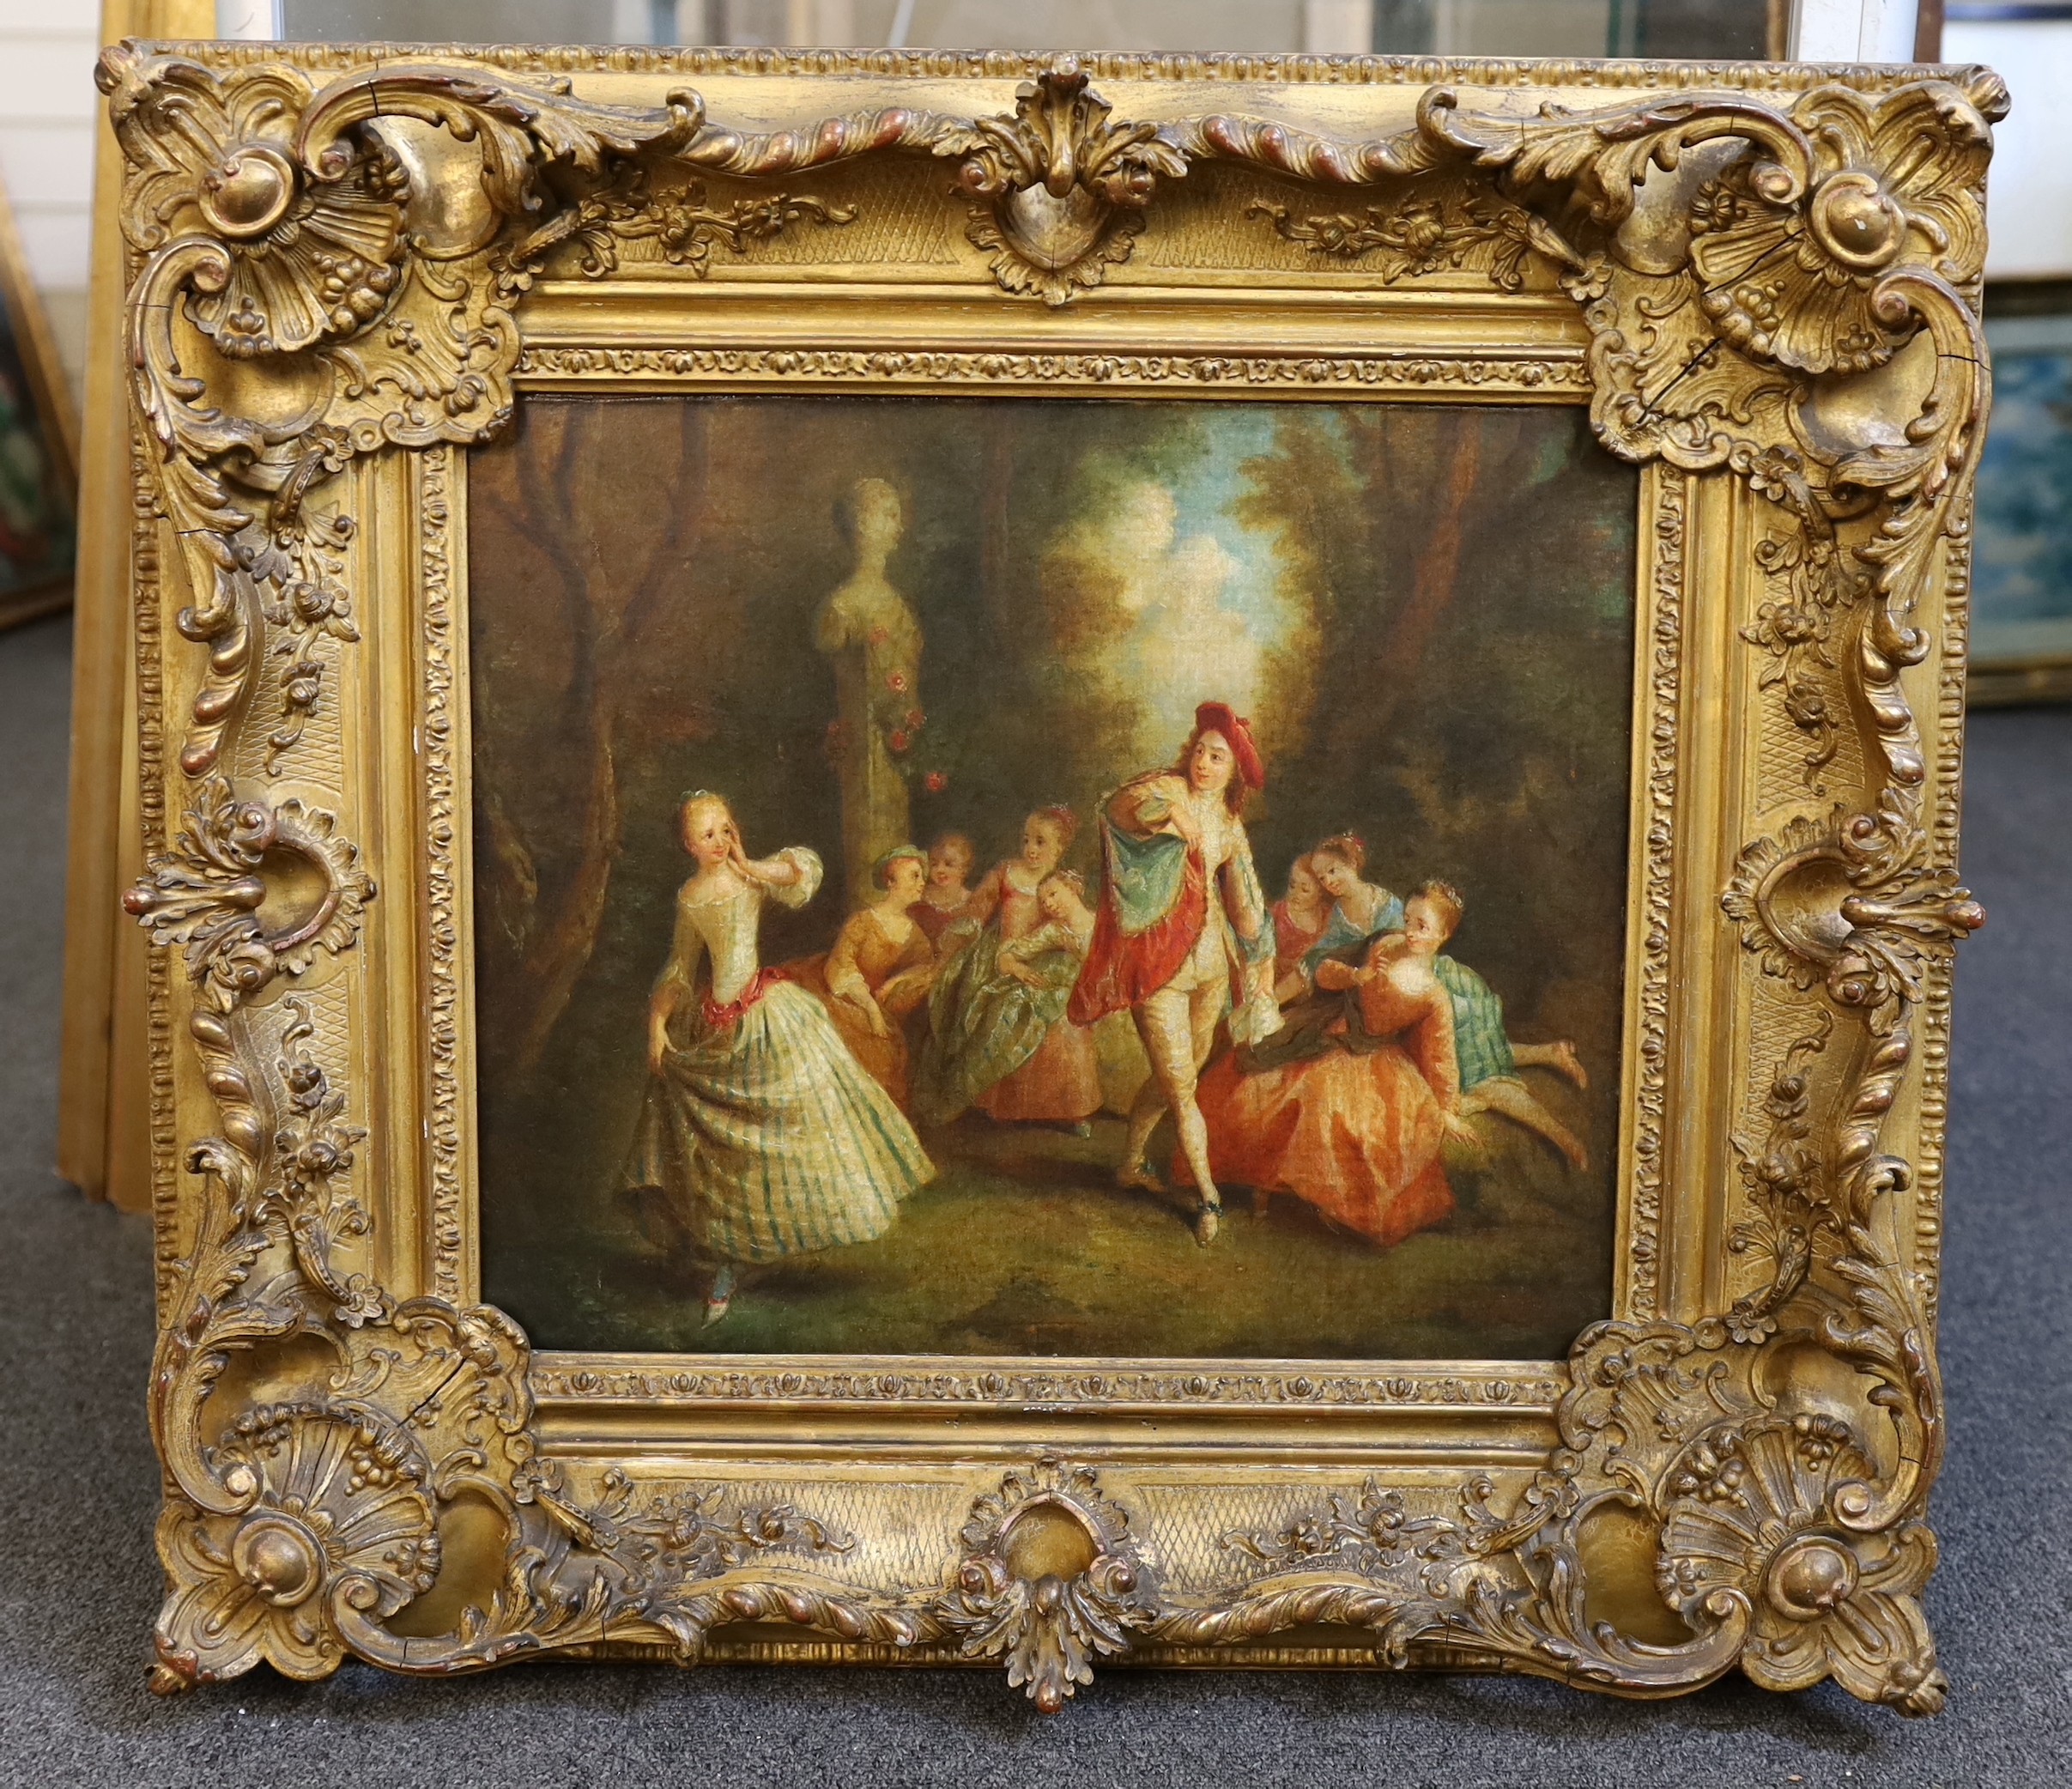 Follower of Jean-Honoré Fragonard (French, 1732-1806), Fête champêtre, oil on canvas, 34 x 41cm